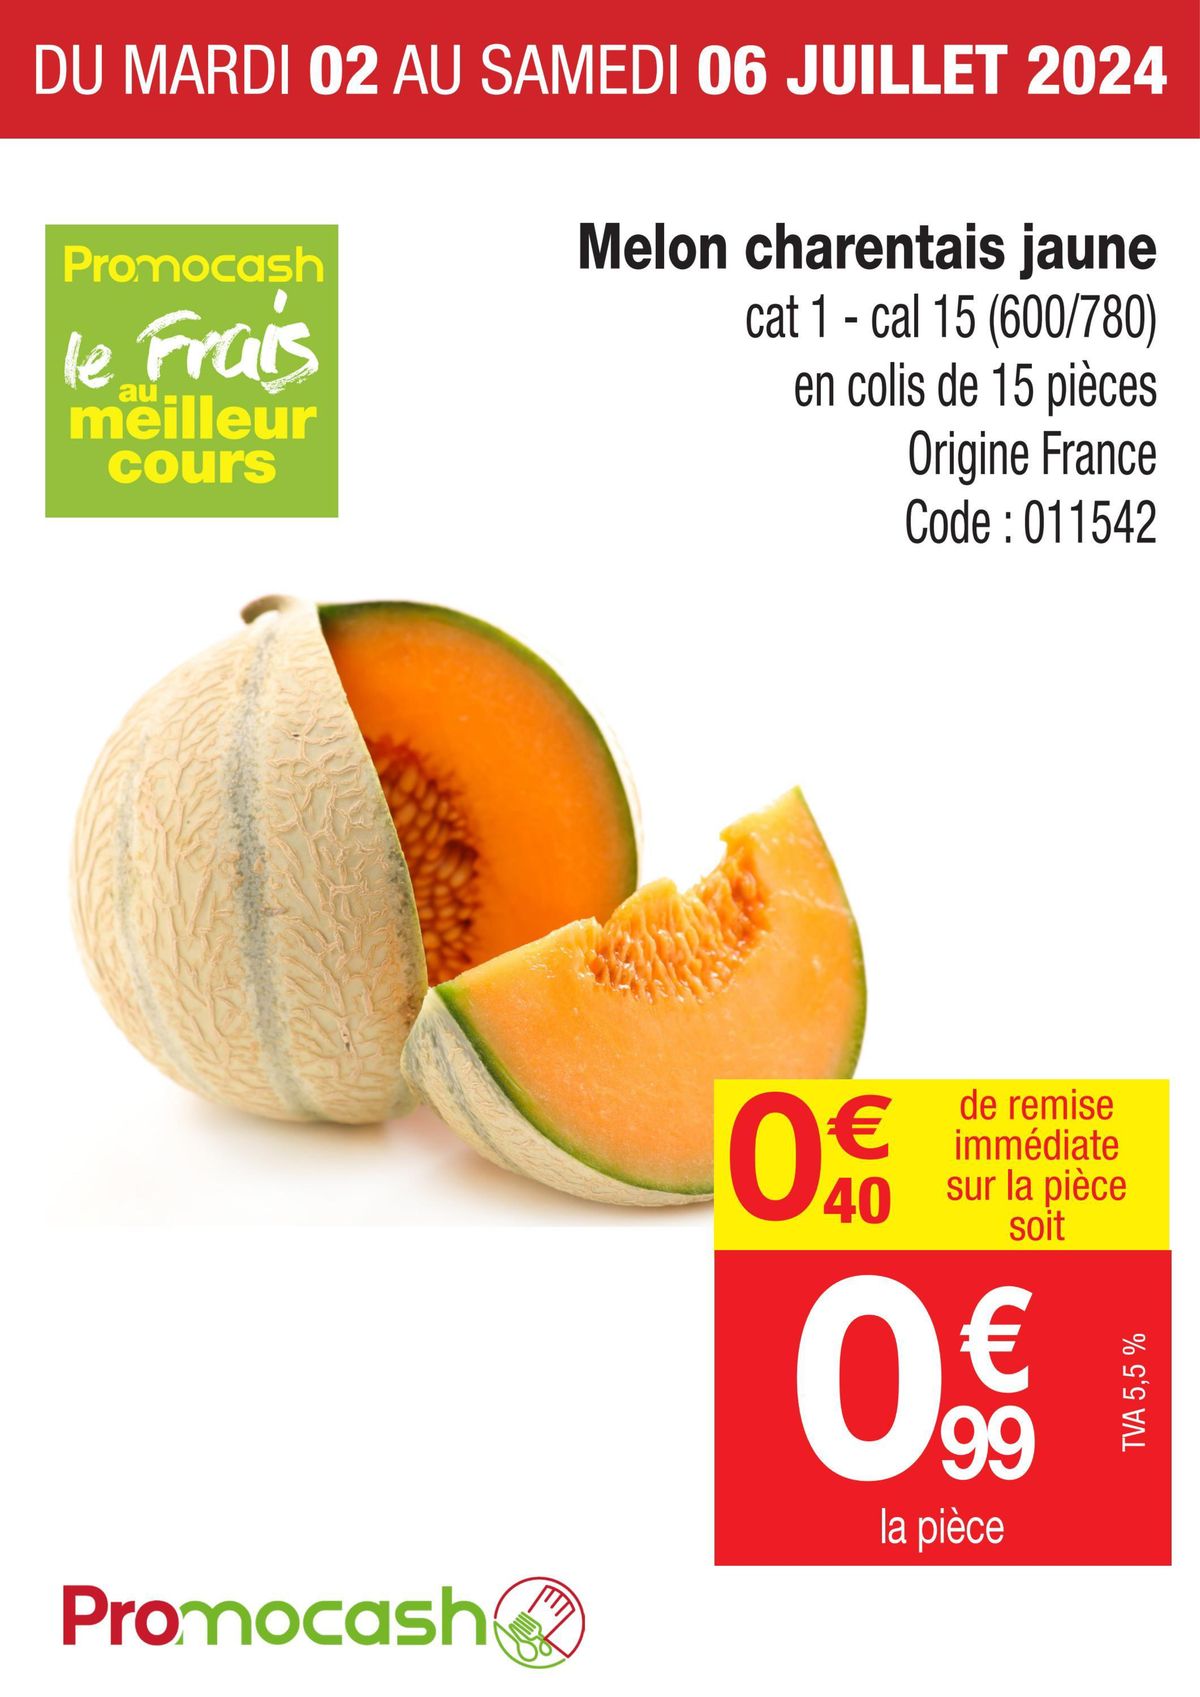 Catalogue Melon charentais jaune, page 00001